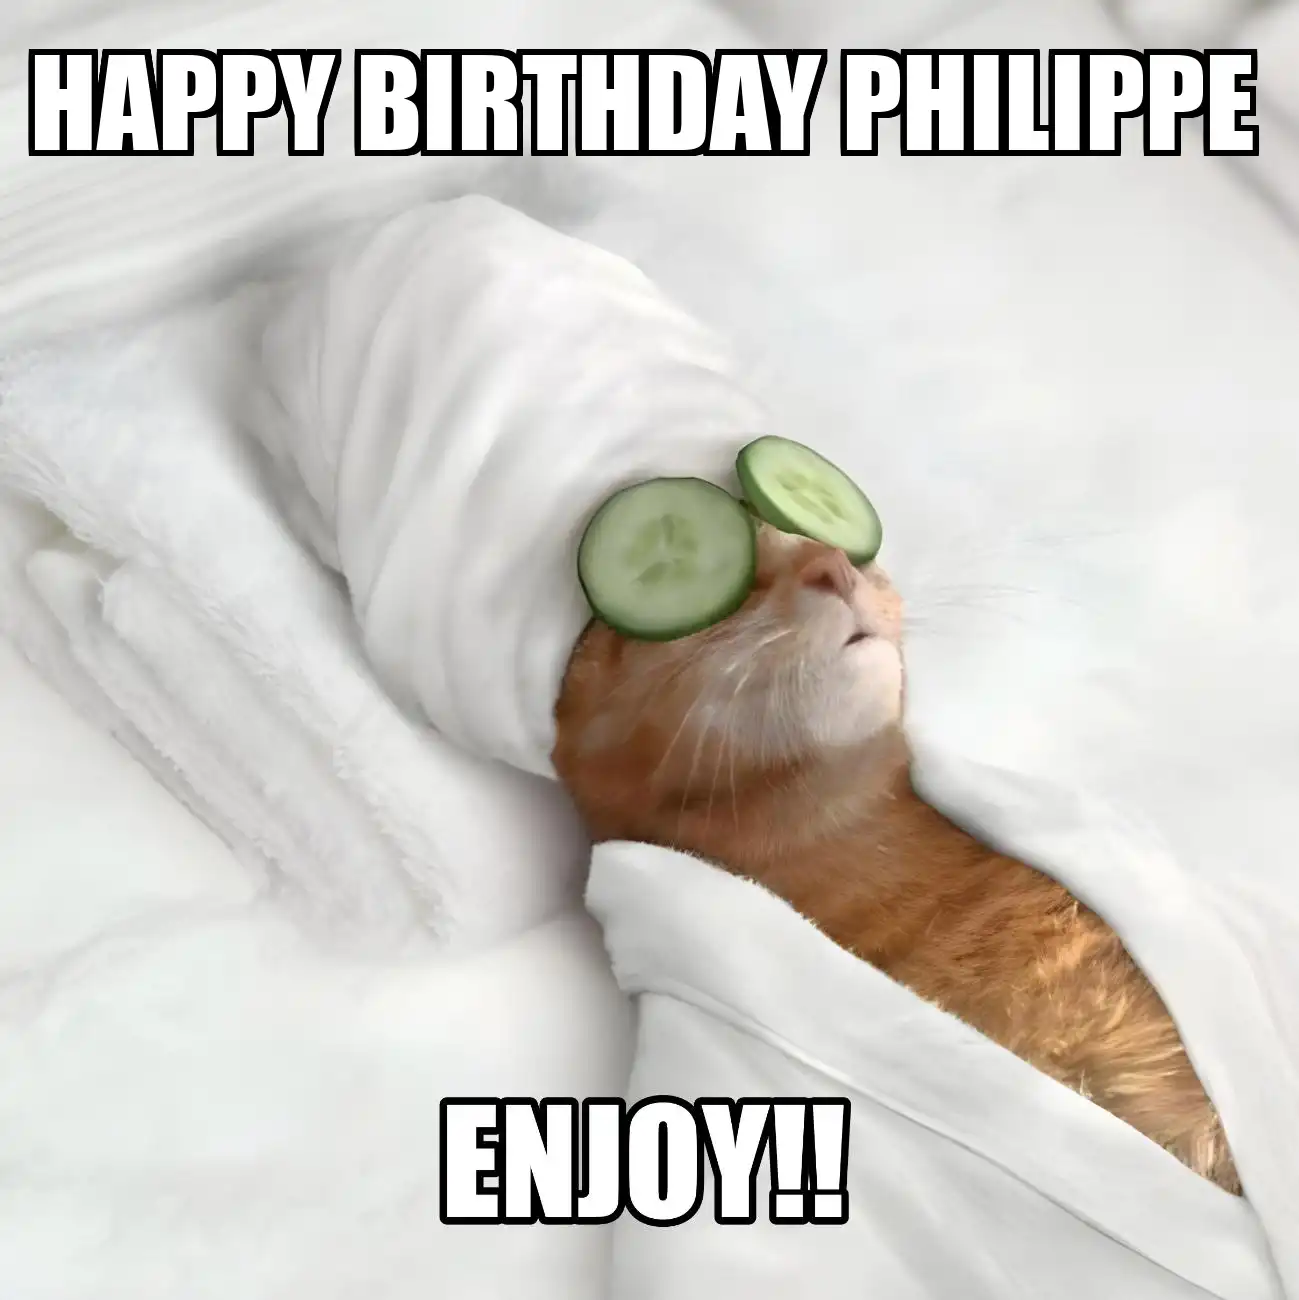 Happy Birthday Philippe Enjoy Cat Meme